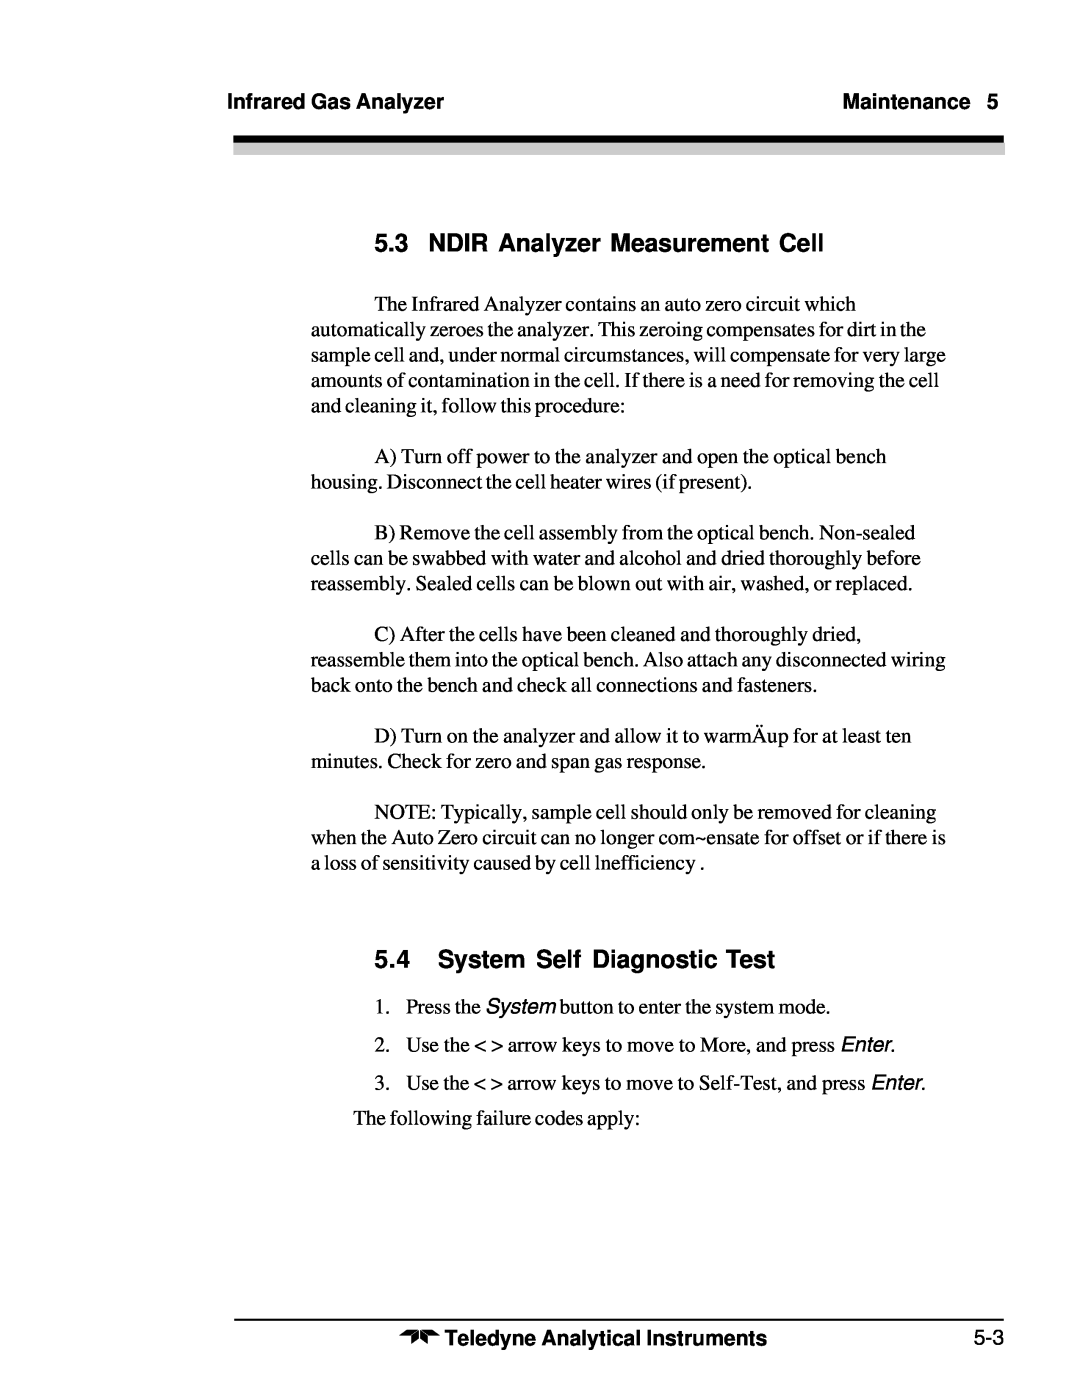 Teledyne 7300A manual NDIR Analyzer Measurement Cell, 5.4System Self Diagnostic Test, Infrared Gas Analyzer, Maintenance 